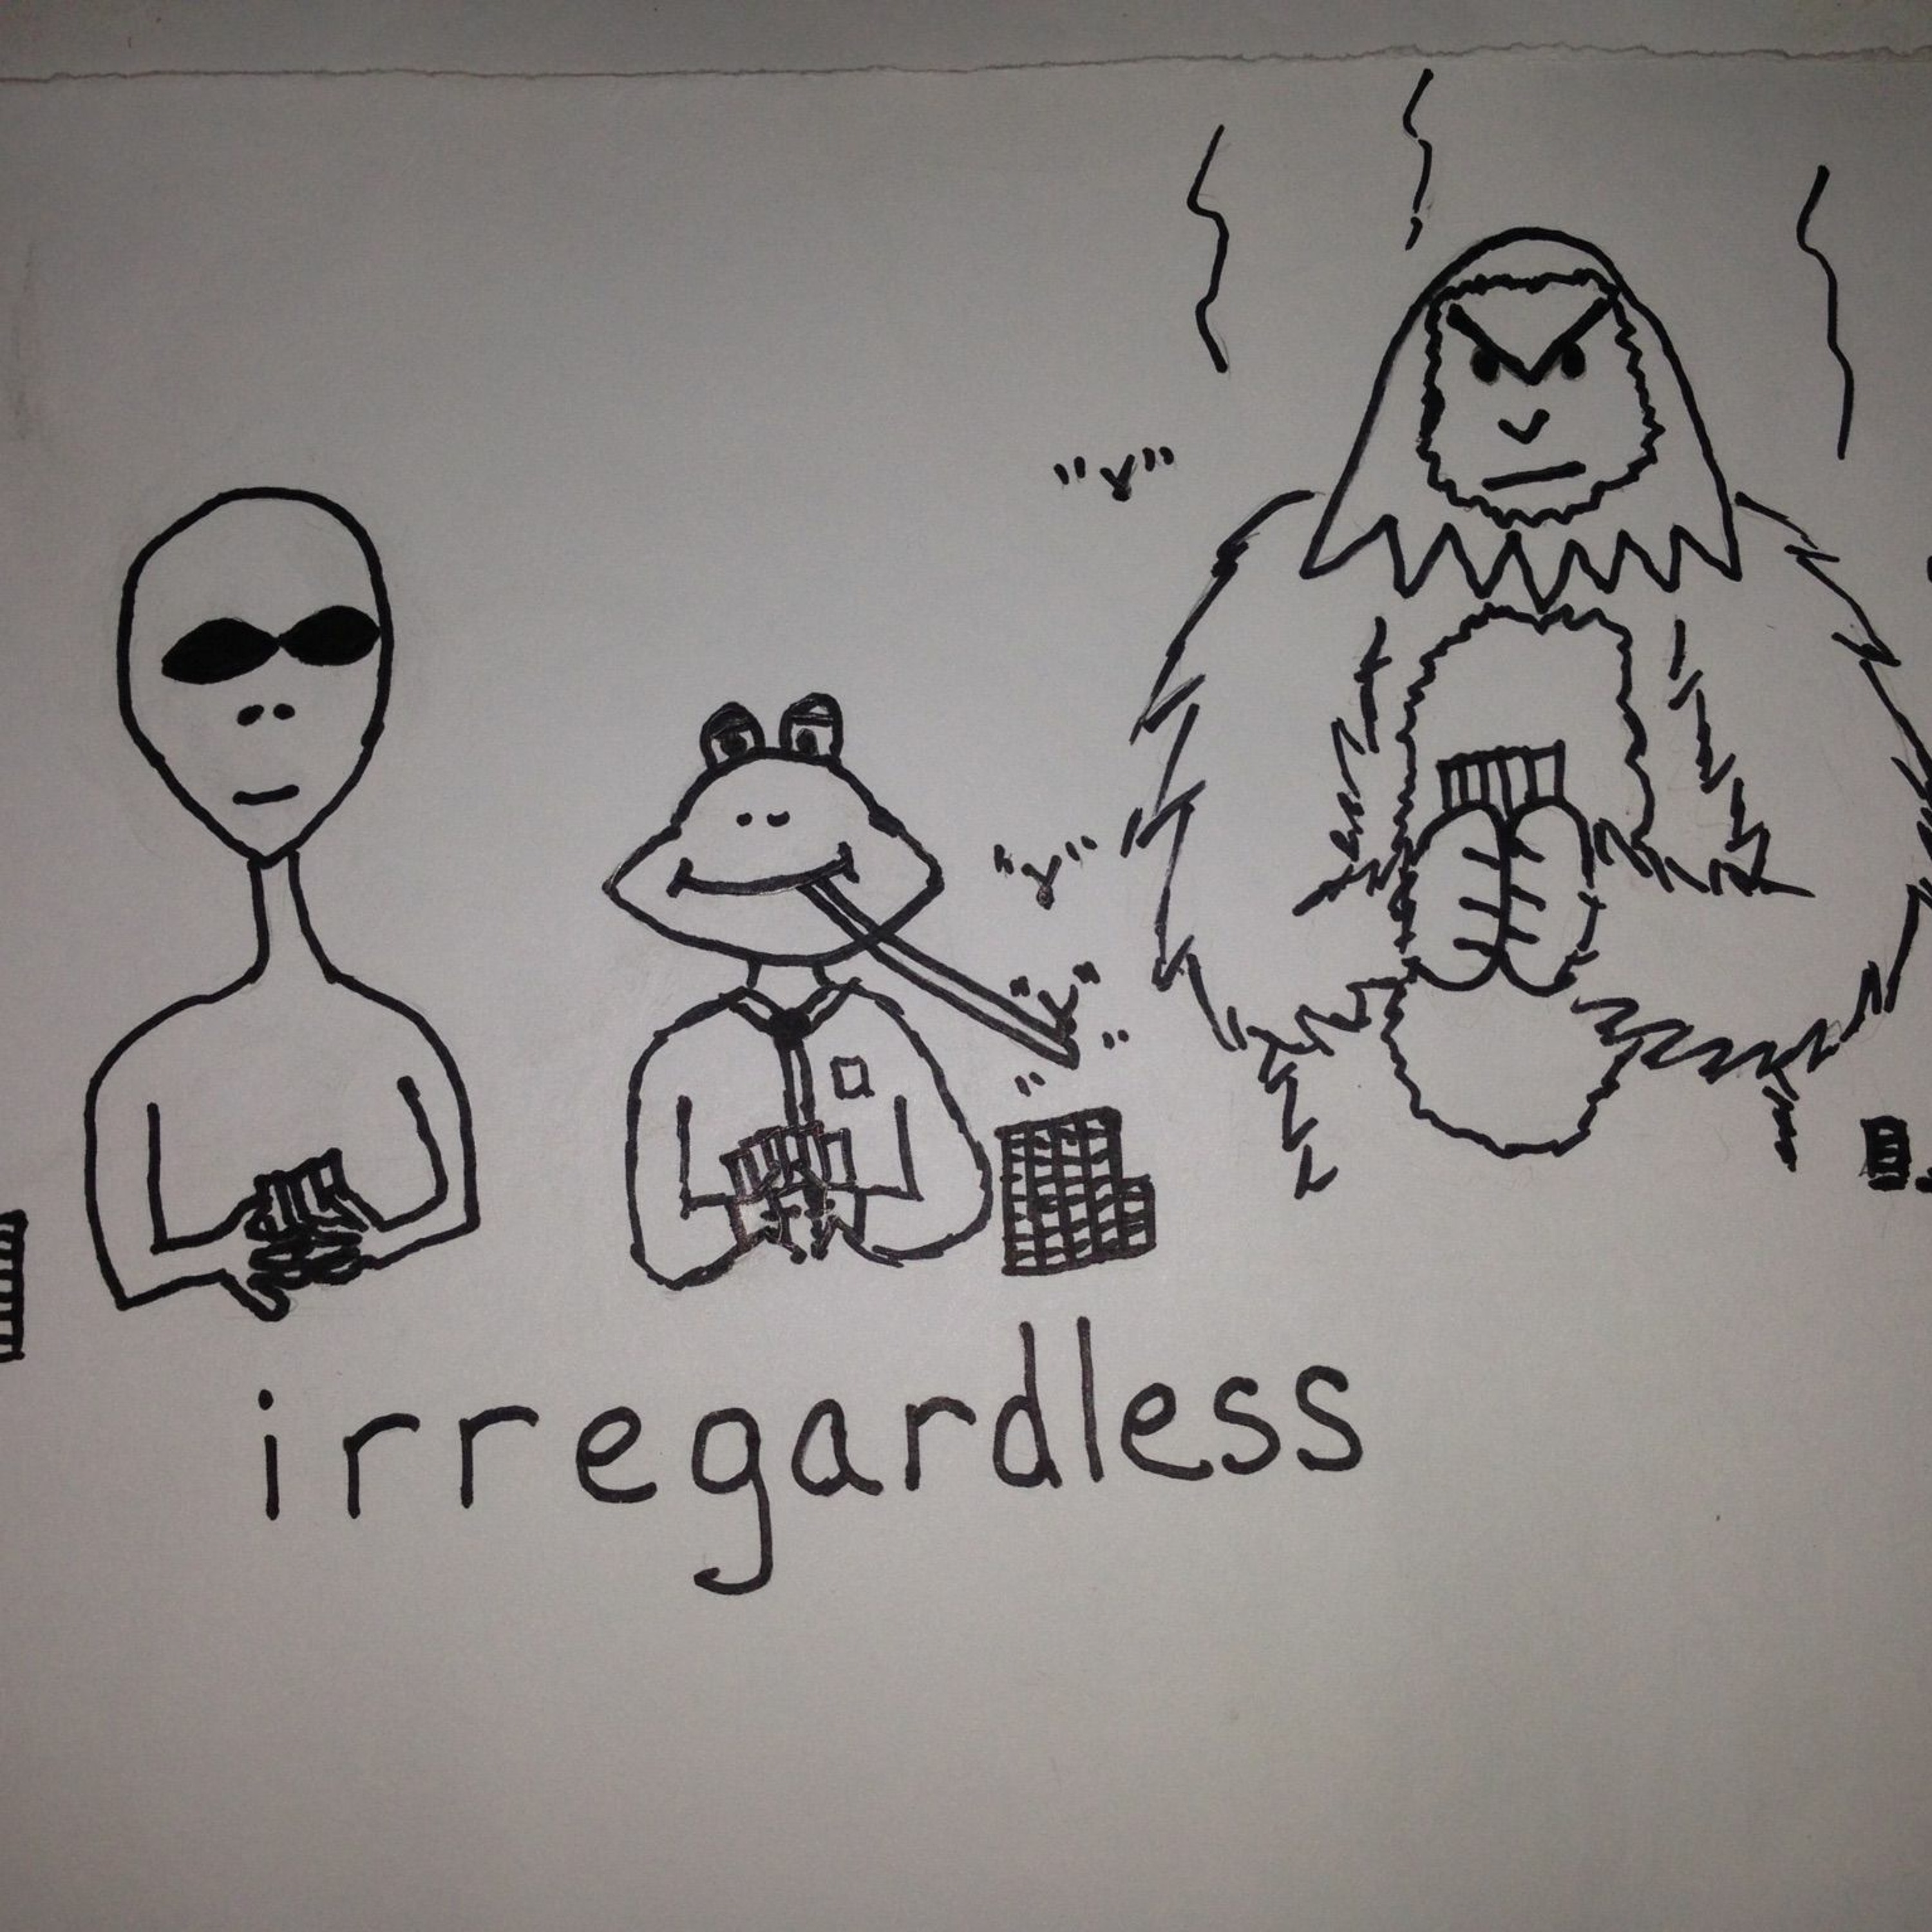 Irregardless Episode 106 - Part 3 - About McFu%$&* Had It (H.P. Lovecraft)